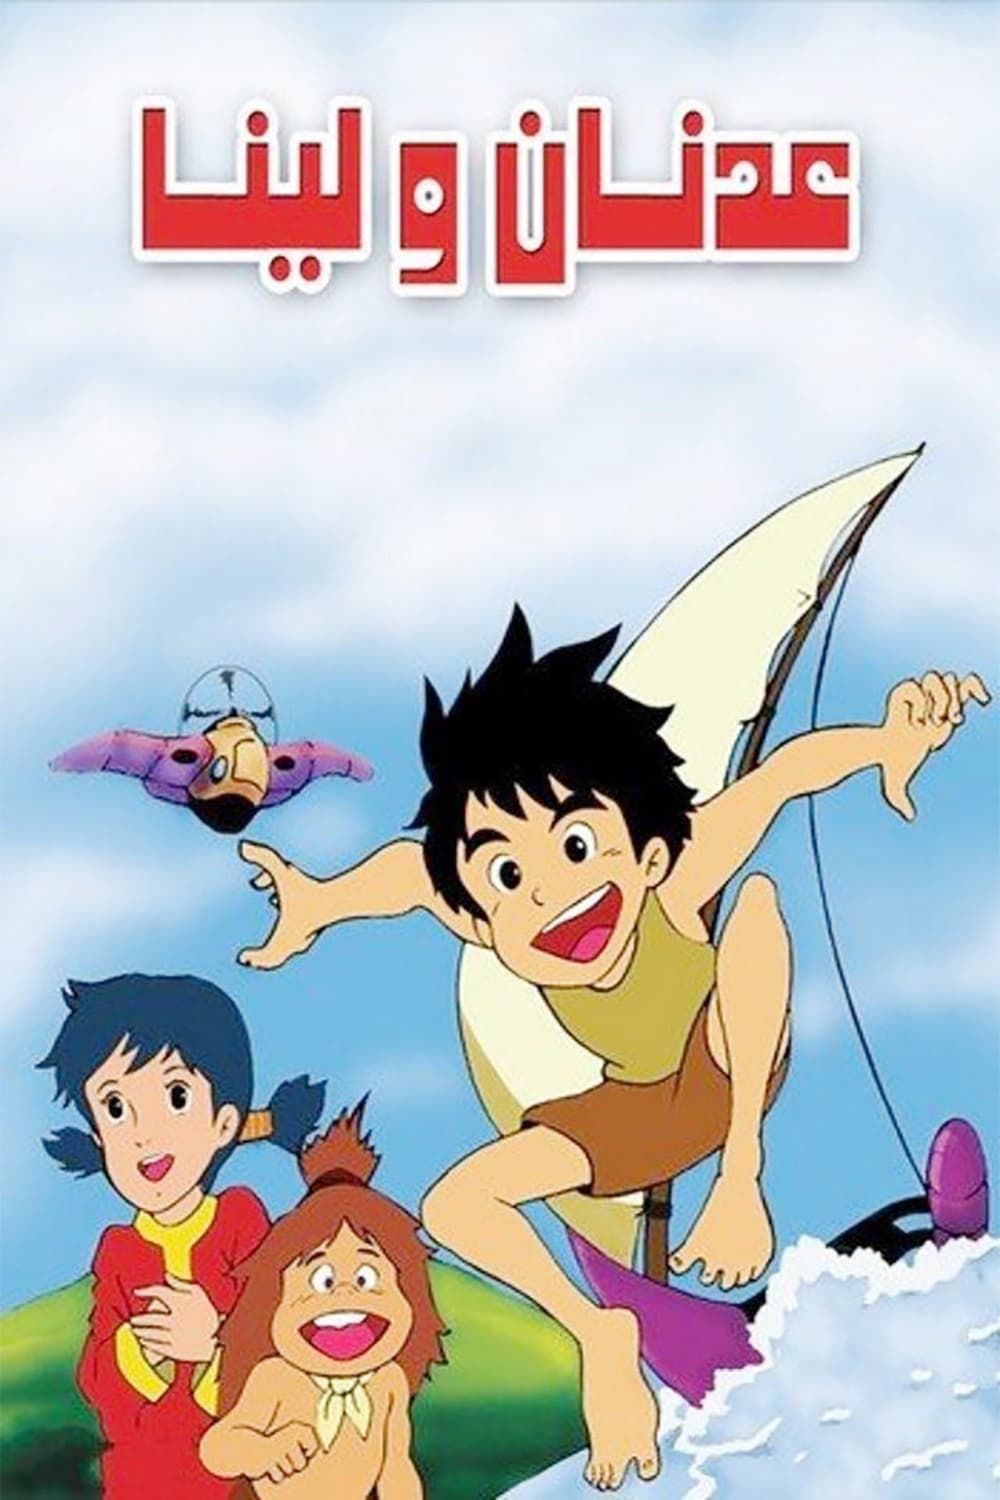 Future Boy Conan (TV) (Sub) The Best Manga